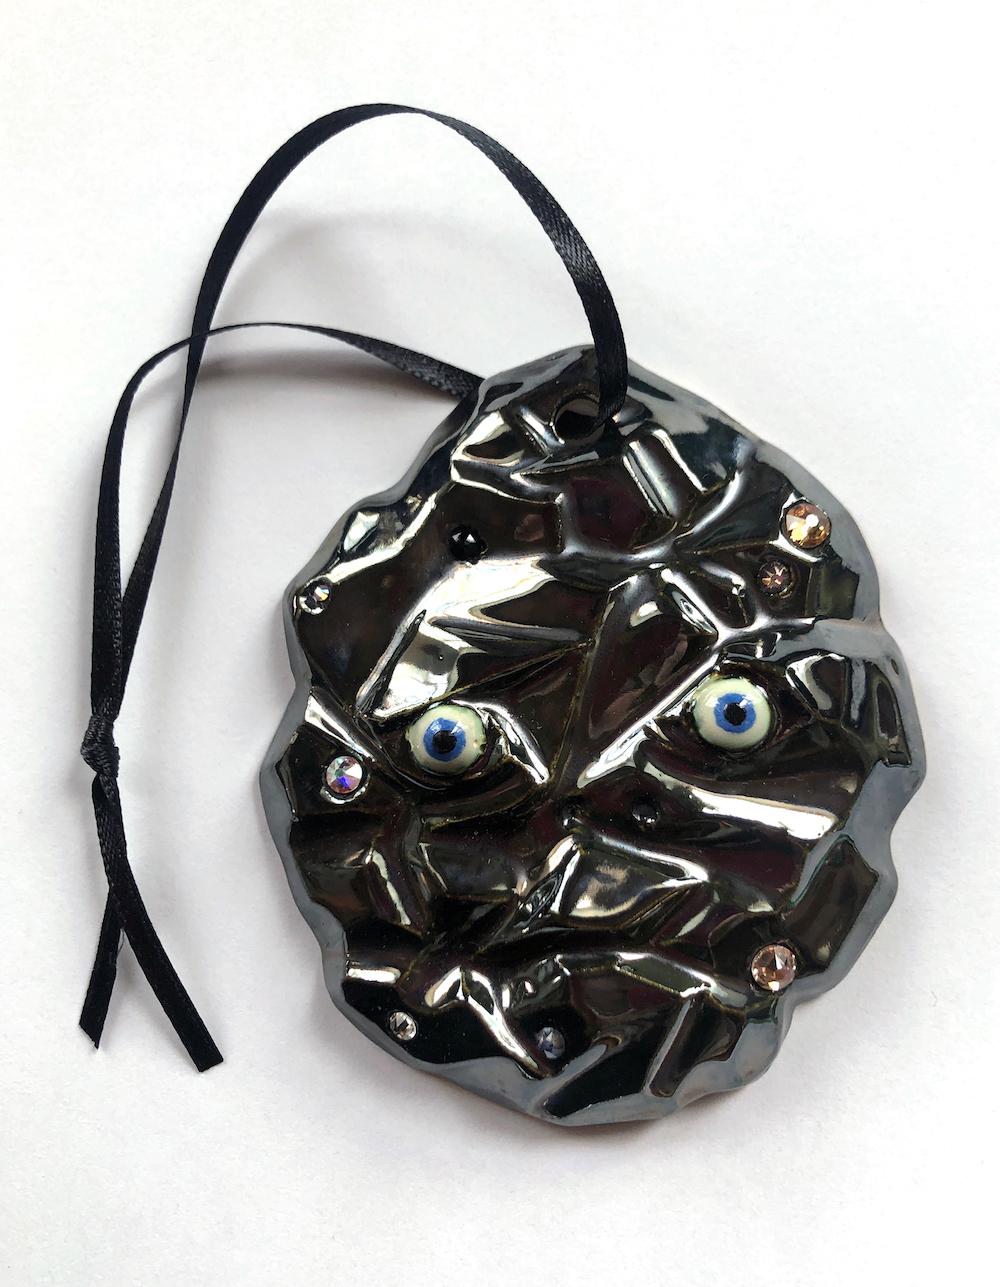 Catherine Heard Figurative Sculpture – Lump of Coal #3, glazed ceramic sculpture with Swaroski crystals